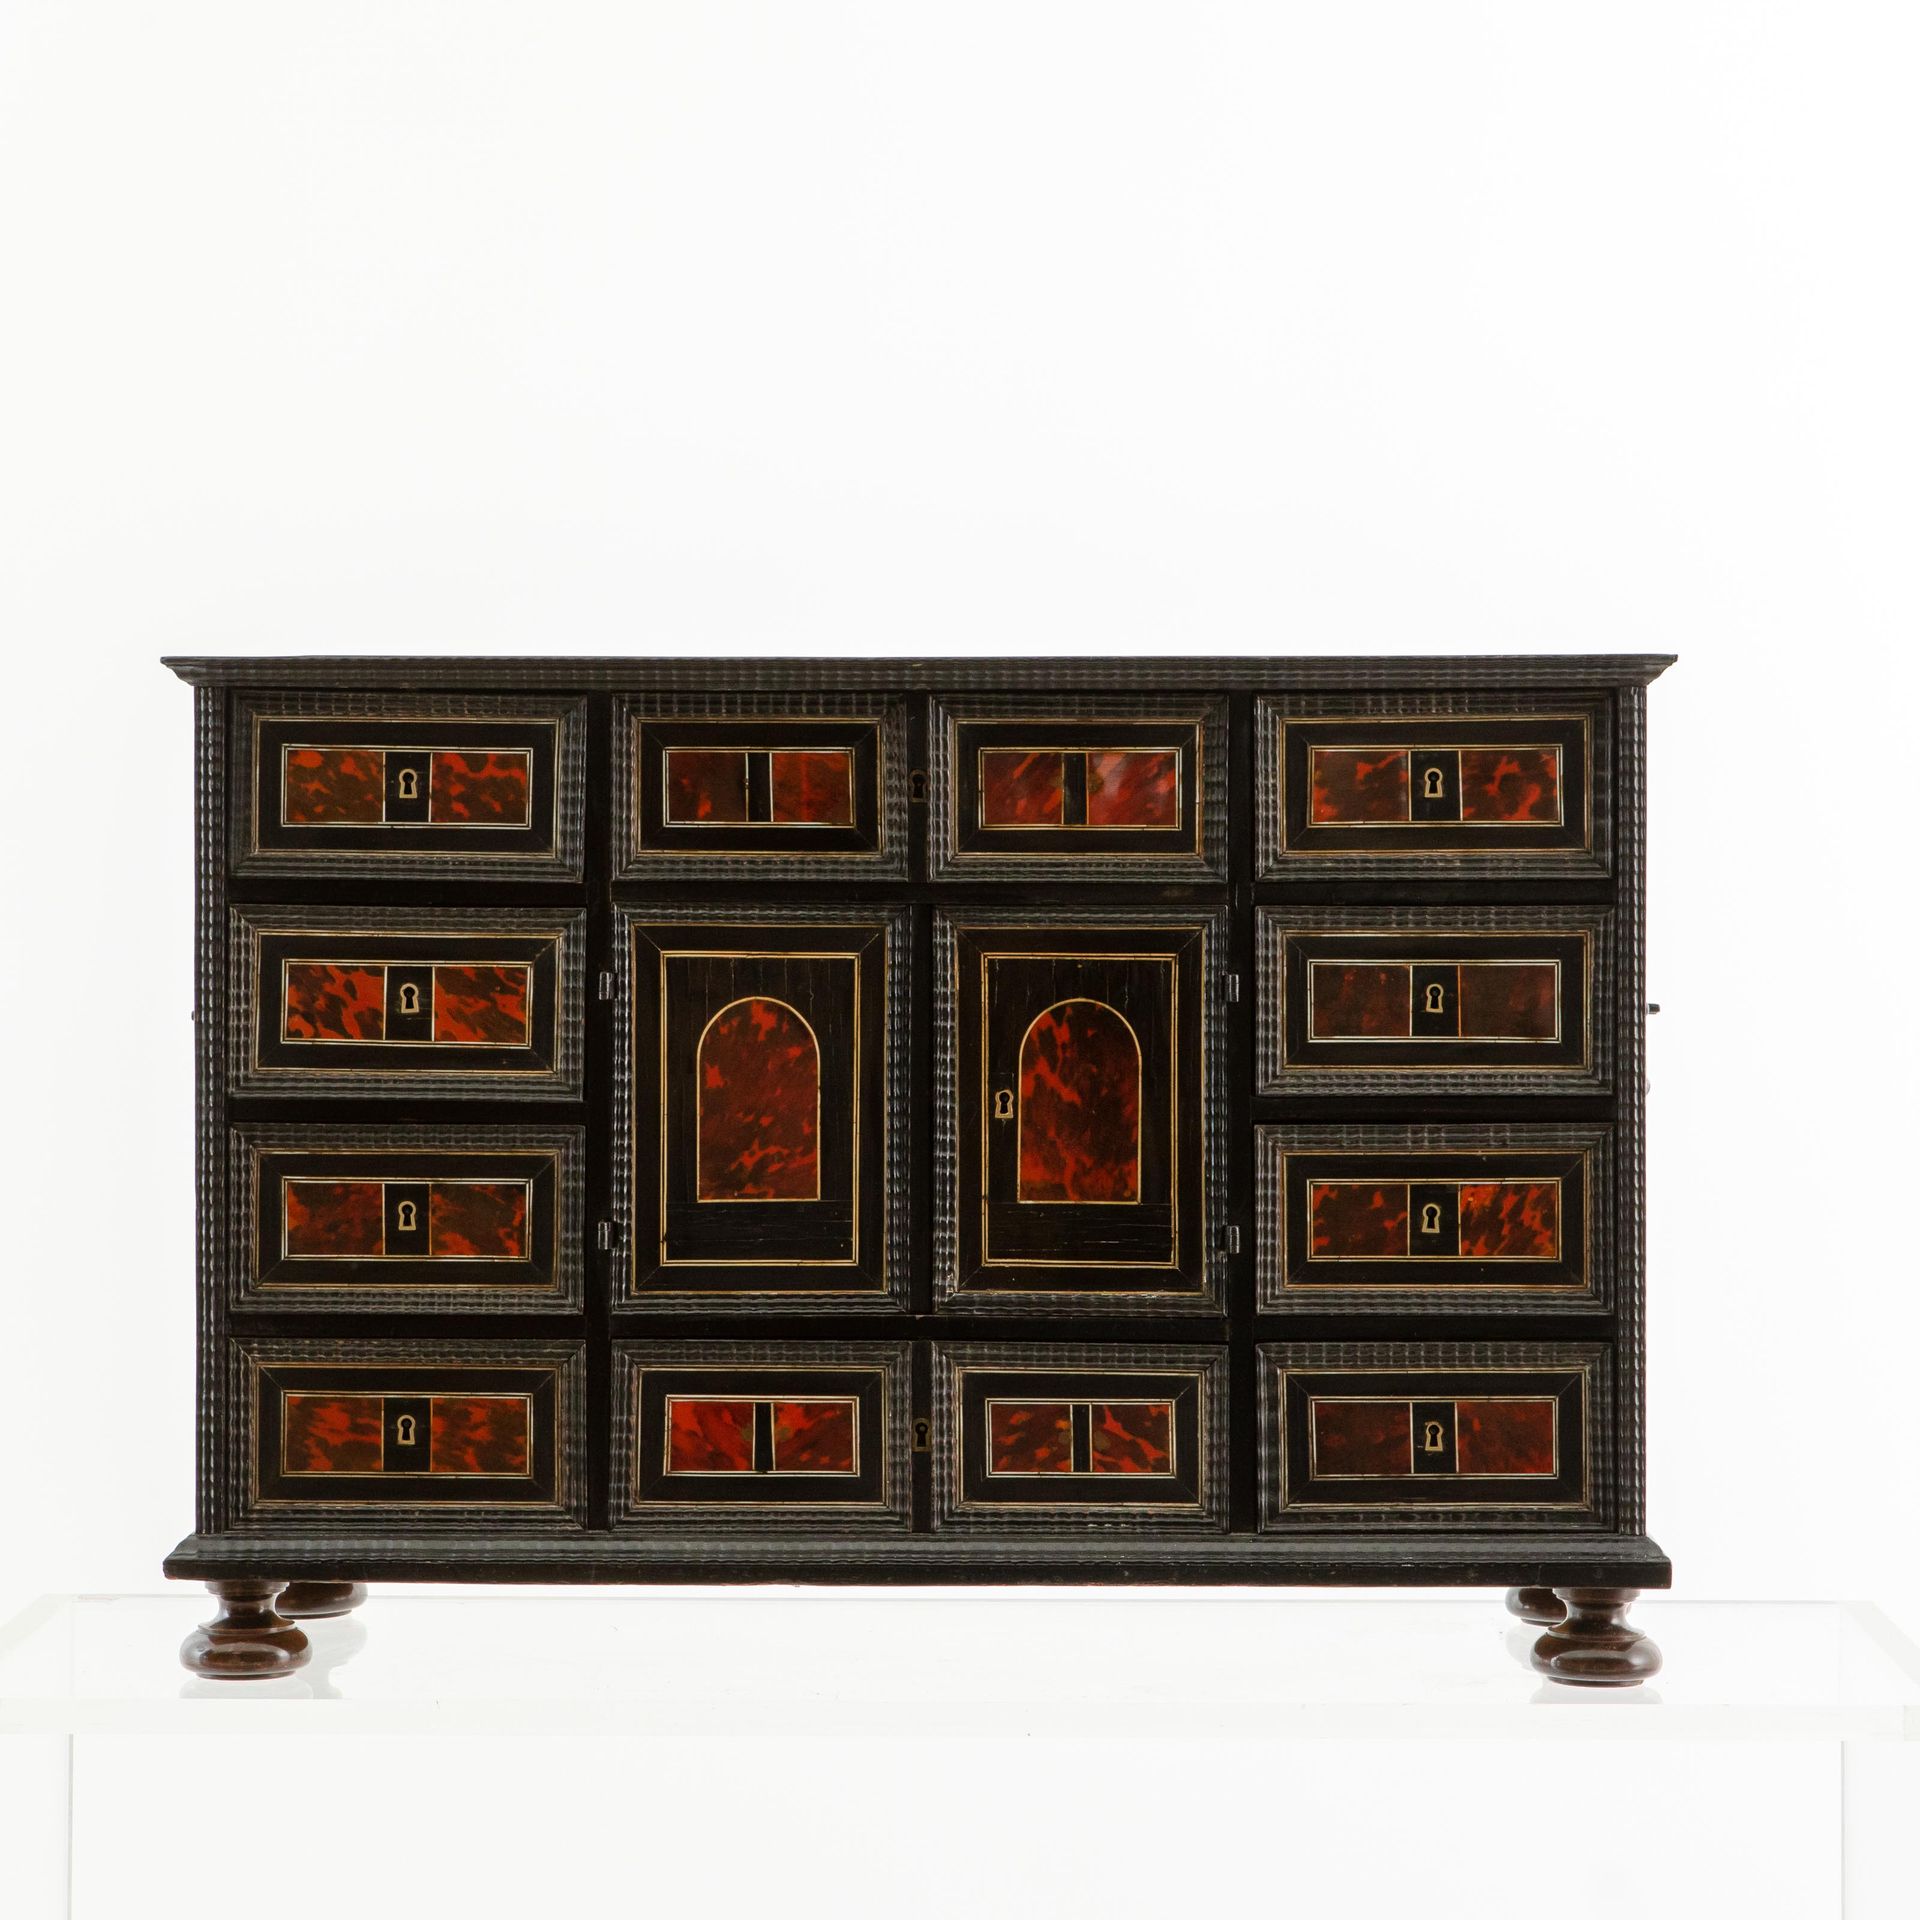 Cabinet à poser. Anvers. Ca. 1700. 艺术柜。安特卫普。约1700年。

发黑的木头，乌木梨木，红木，玳瑁贴面，骨质，并以扇形的&hellip;